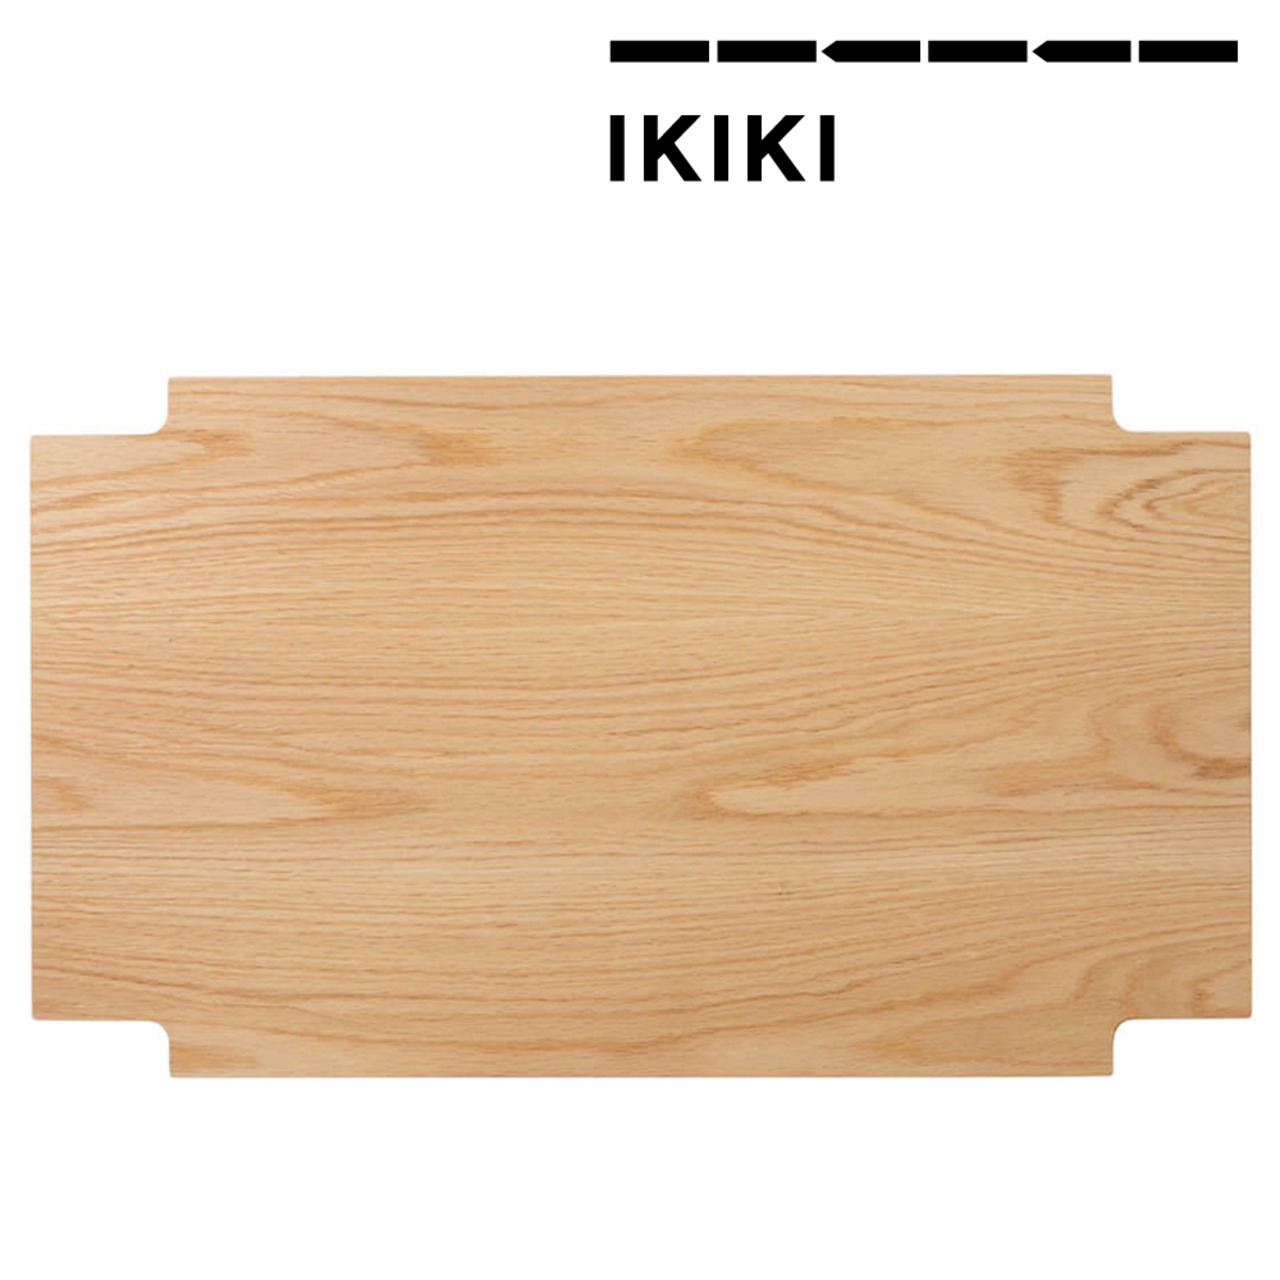 IKIKI(イキキ) トップパネル Mサイズ オーク 天然木材 木製 機能コンテナ